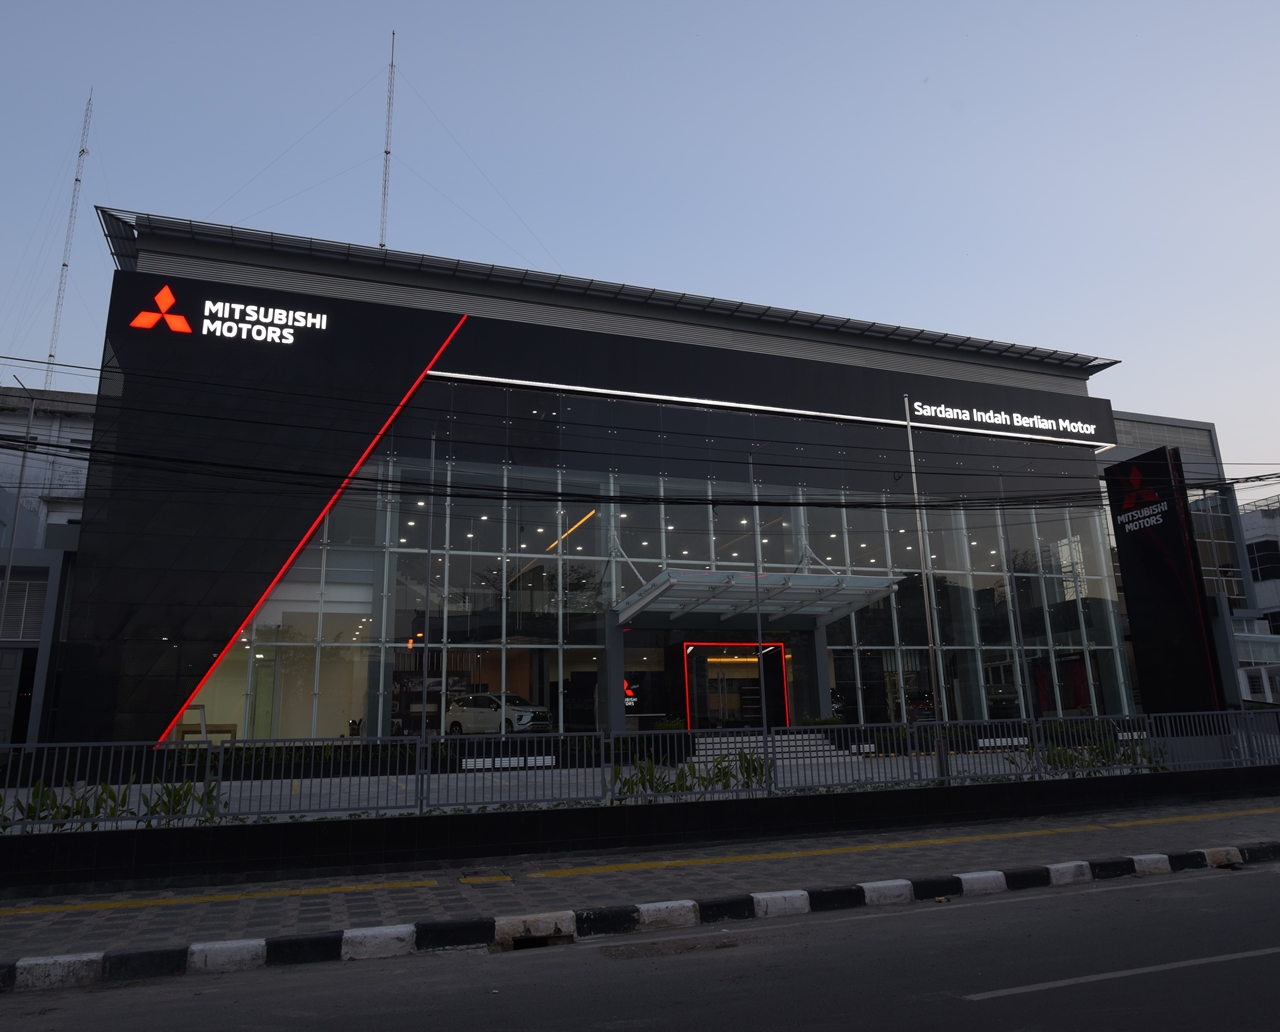 Dealer Sardana IndahBerlian Motor Medan Jadi Dealer Mitsubishi Terbaik se-Indonesia 